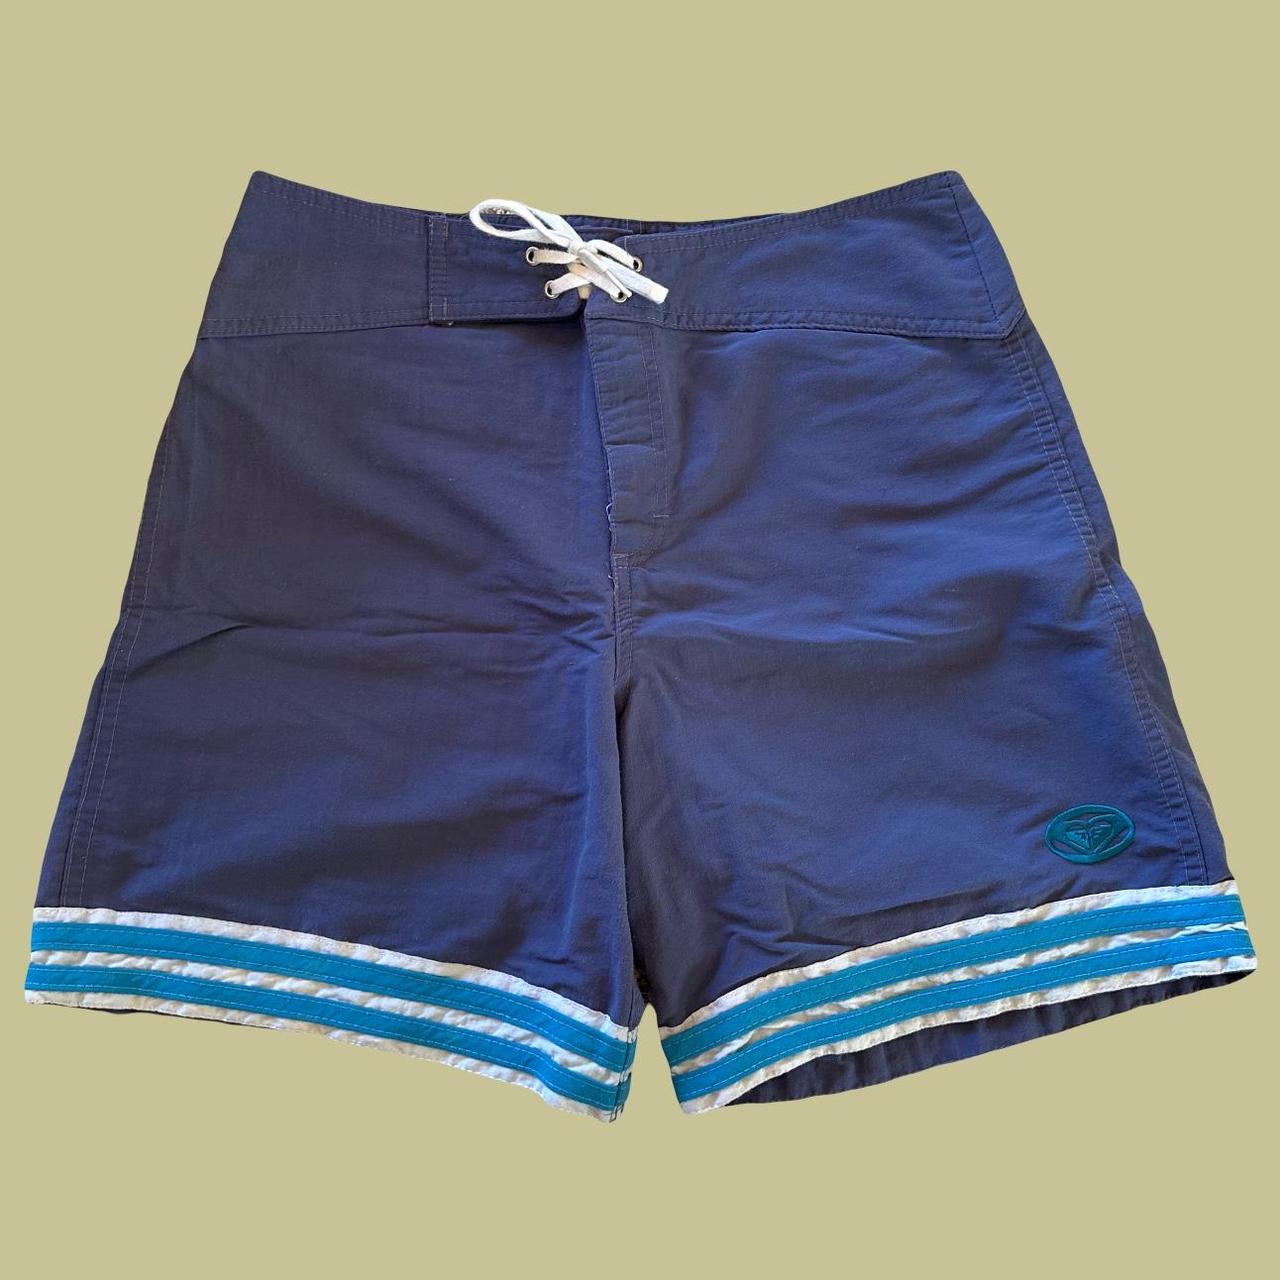 Vintage Roxy board shorts. Marked size 9 but runs small - Depop